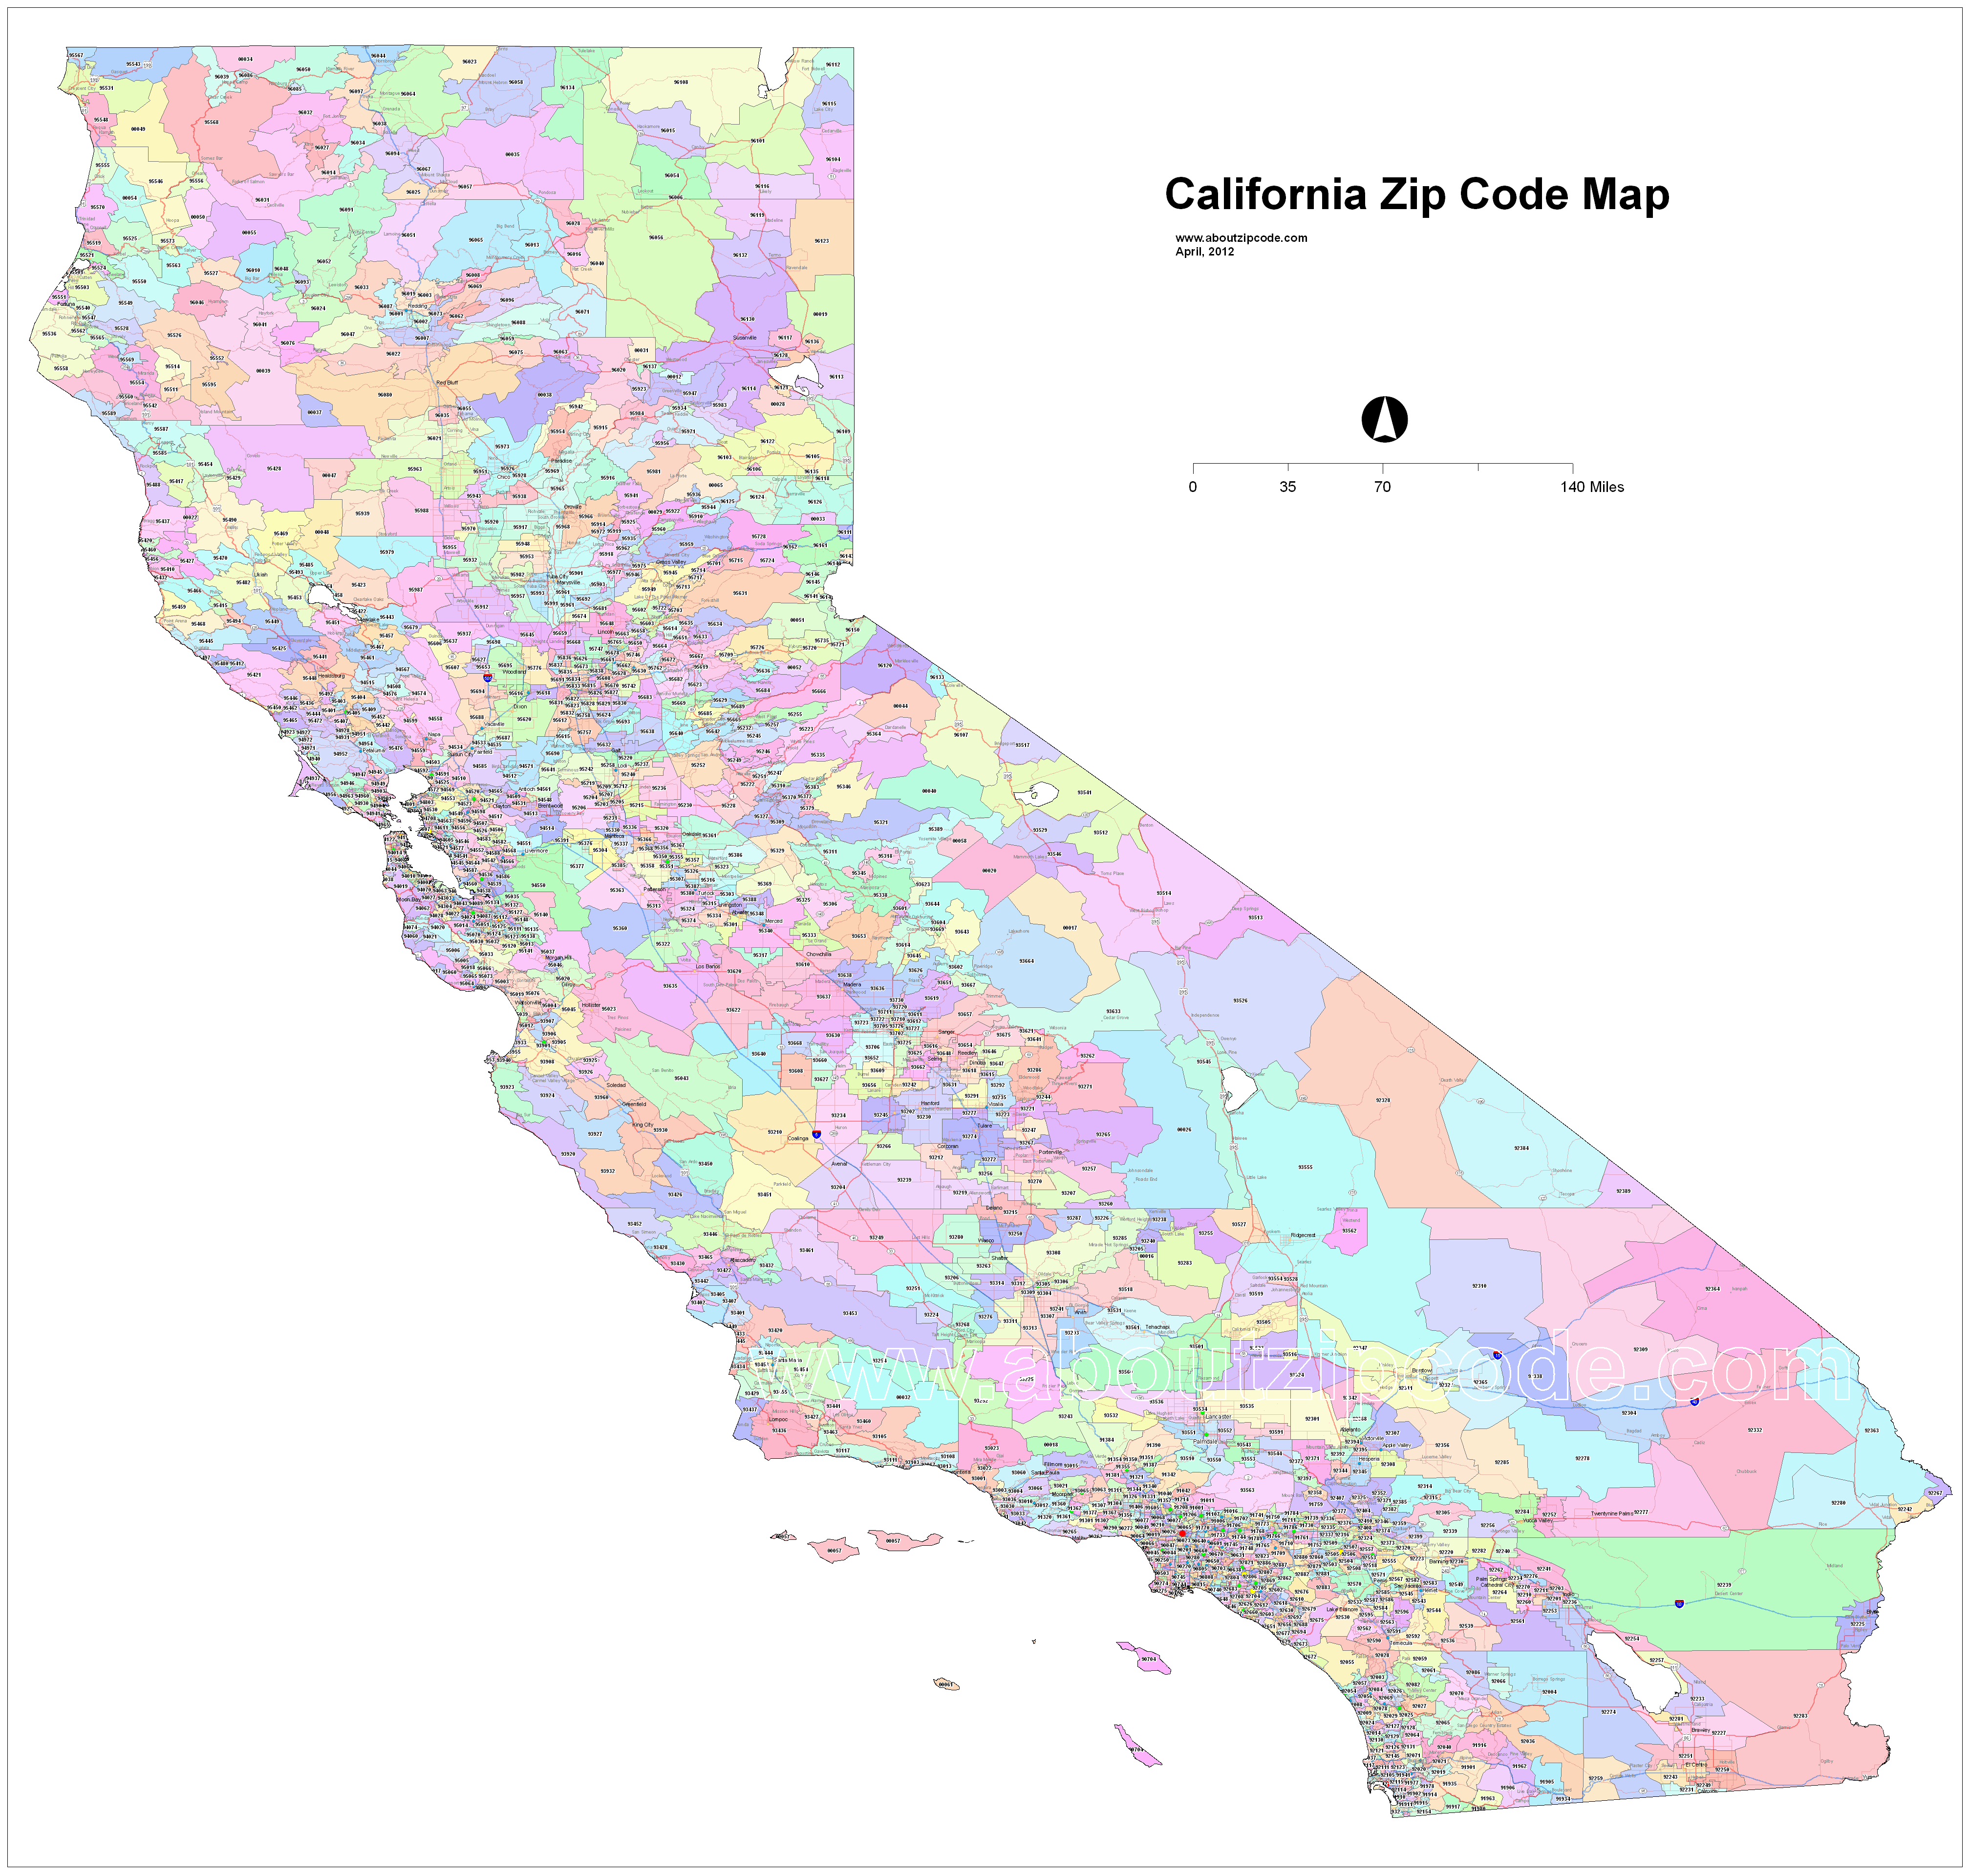 California Zip Code Maps - Free California Zip Code Maps